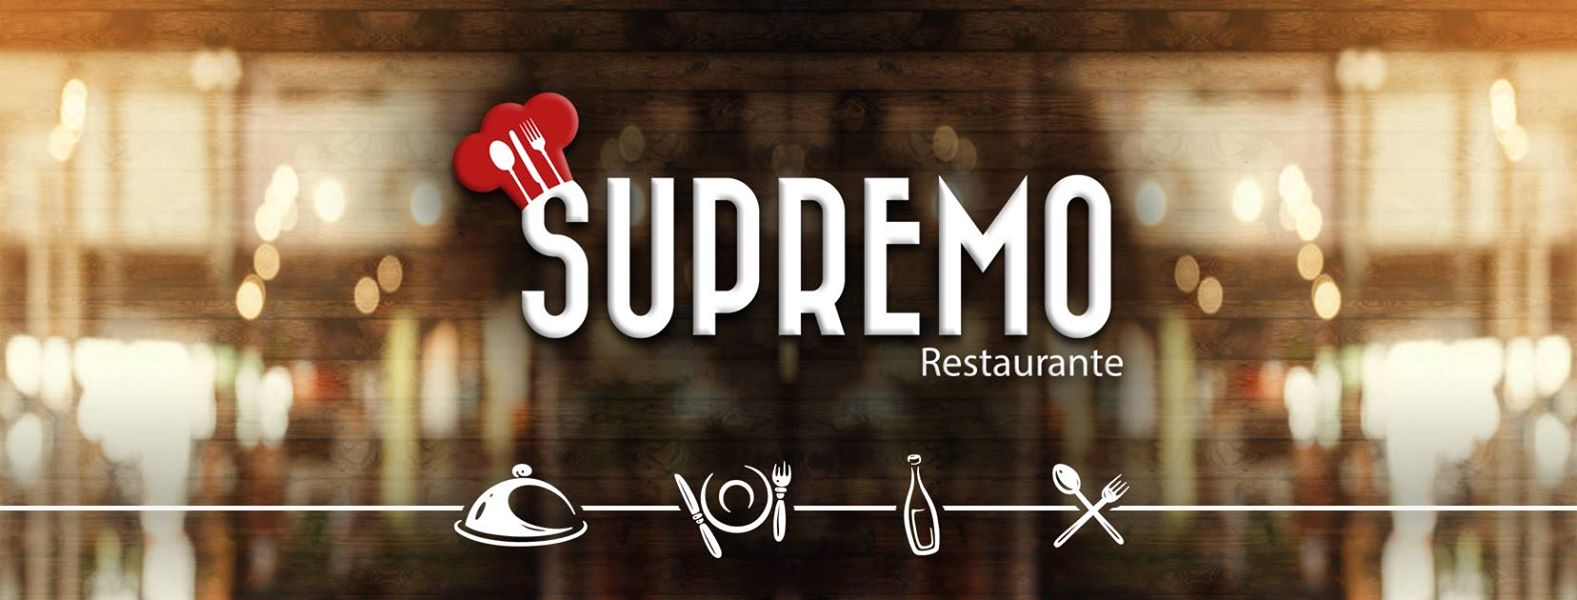 Supremo Restaurante slide 0